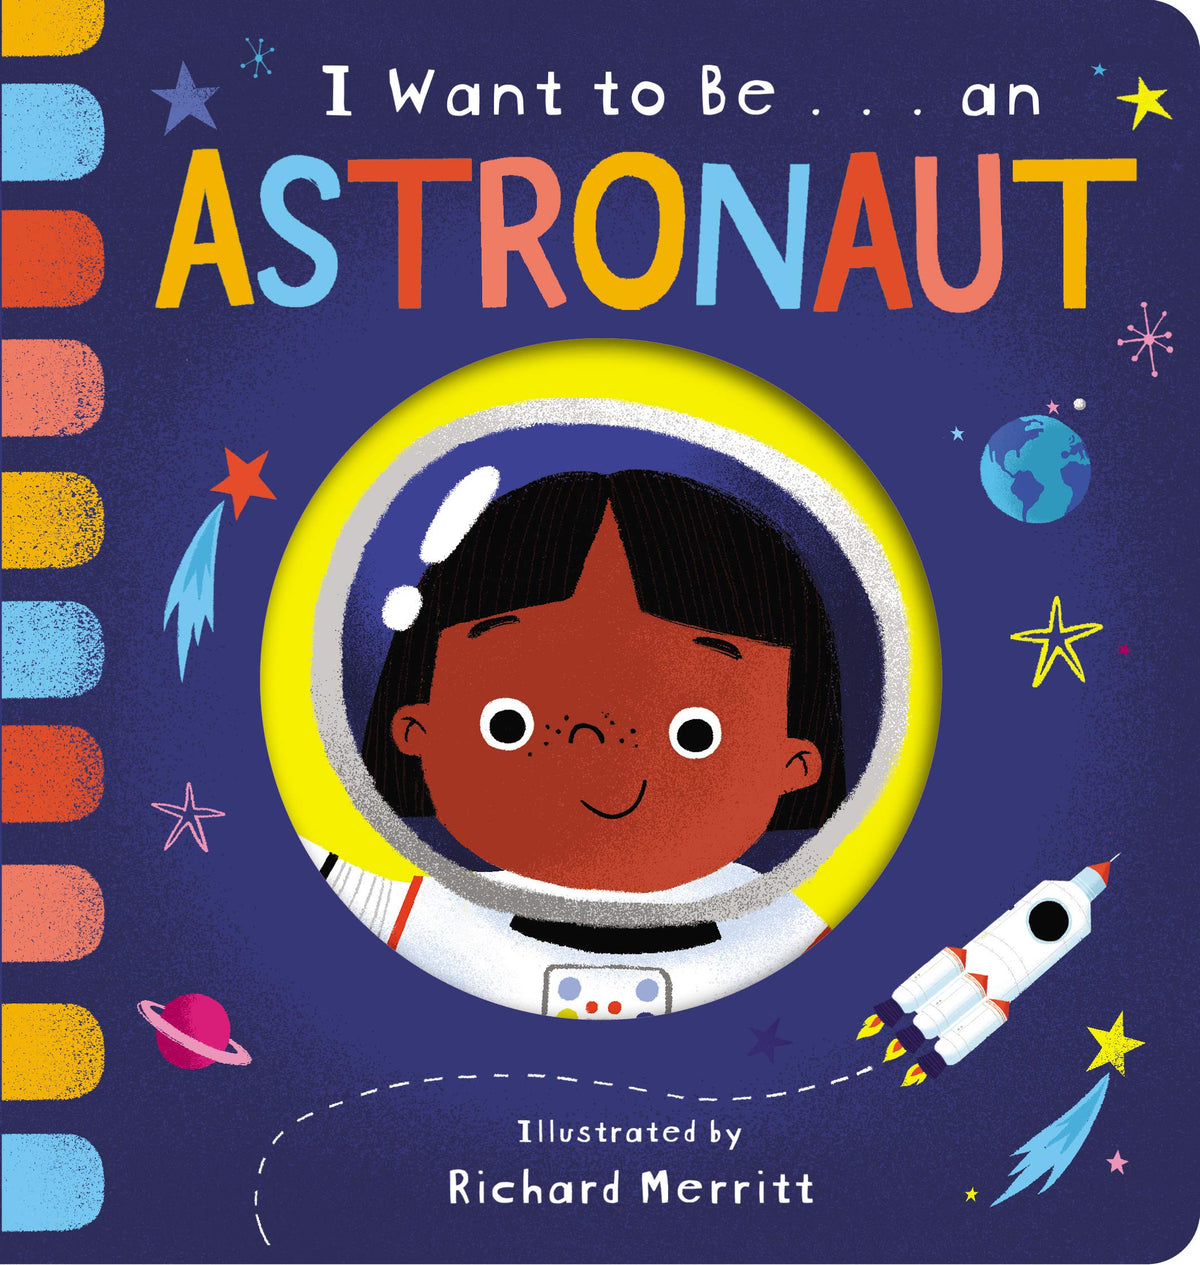 I Want to be an Astronaut by Richard Merritt